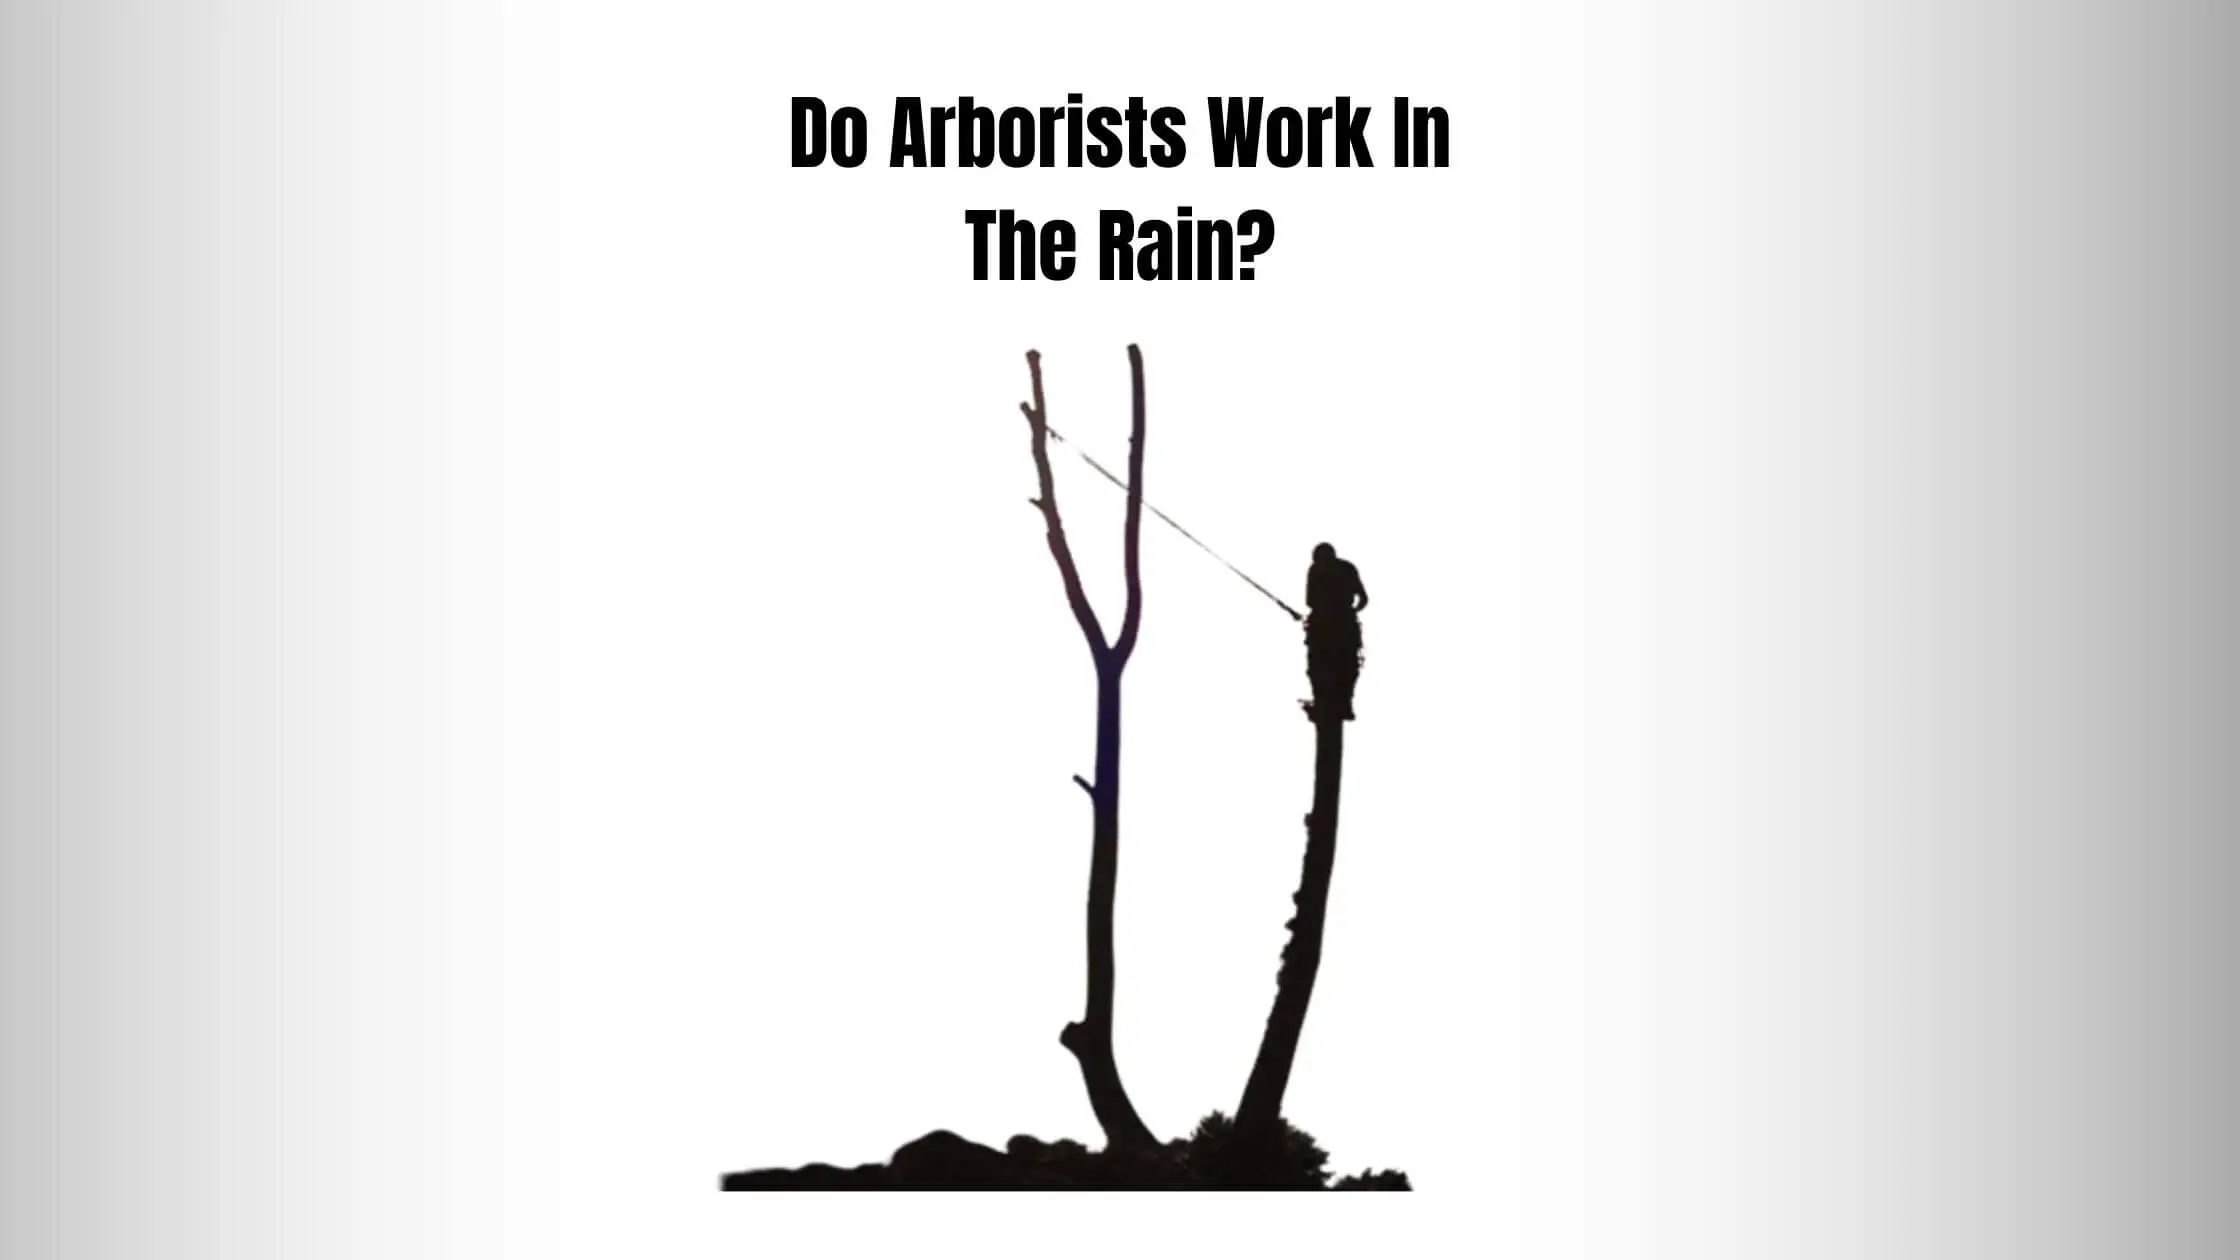 Do Arborists Work In The Rain?